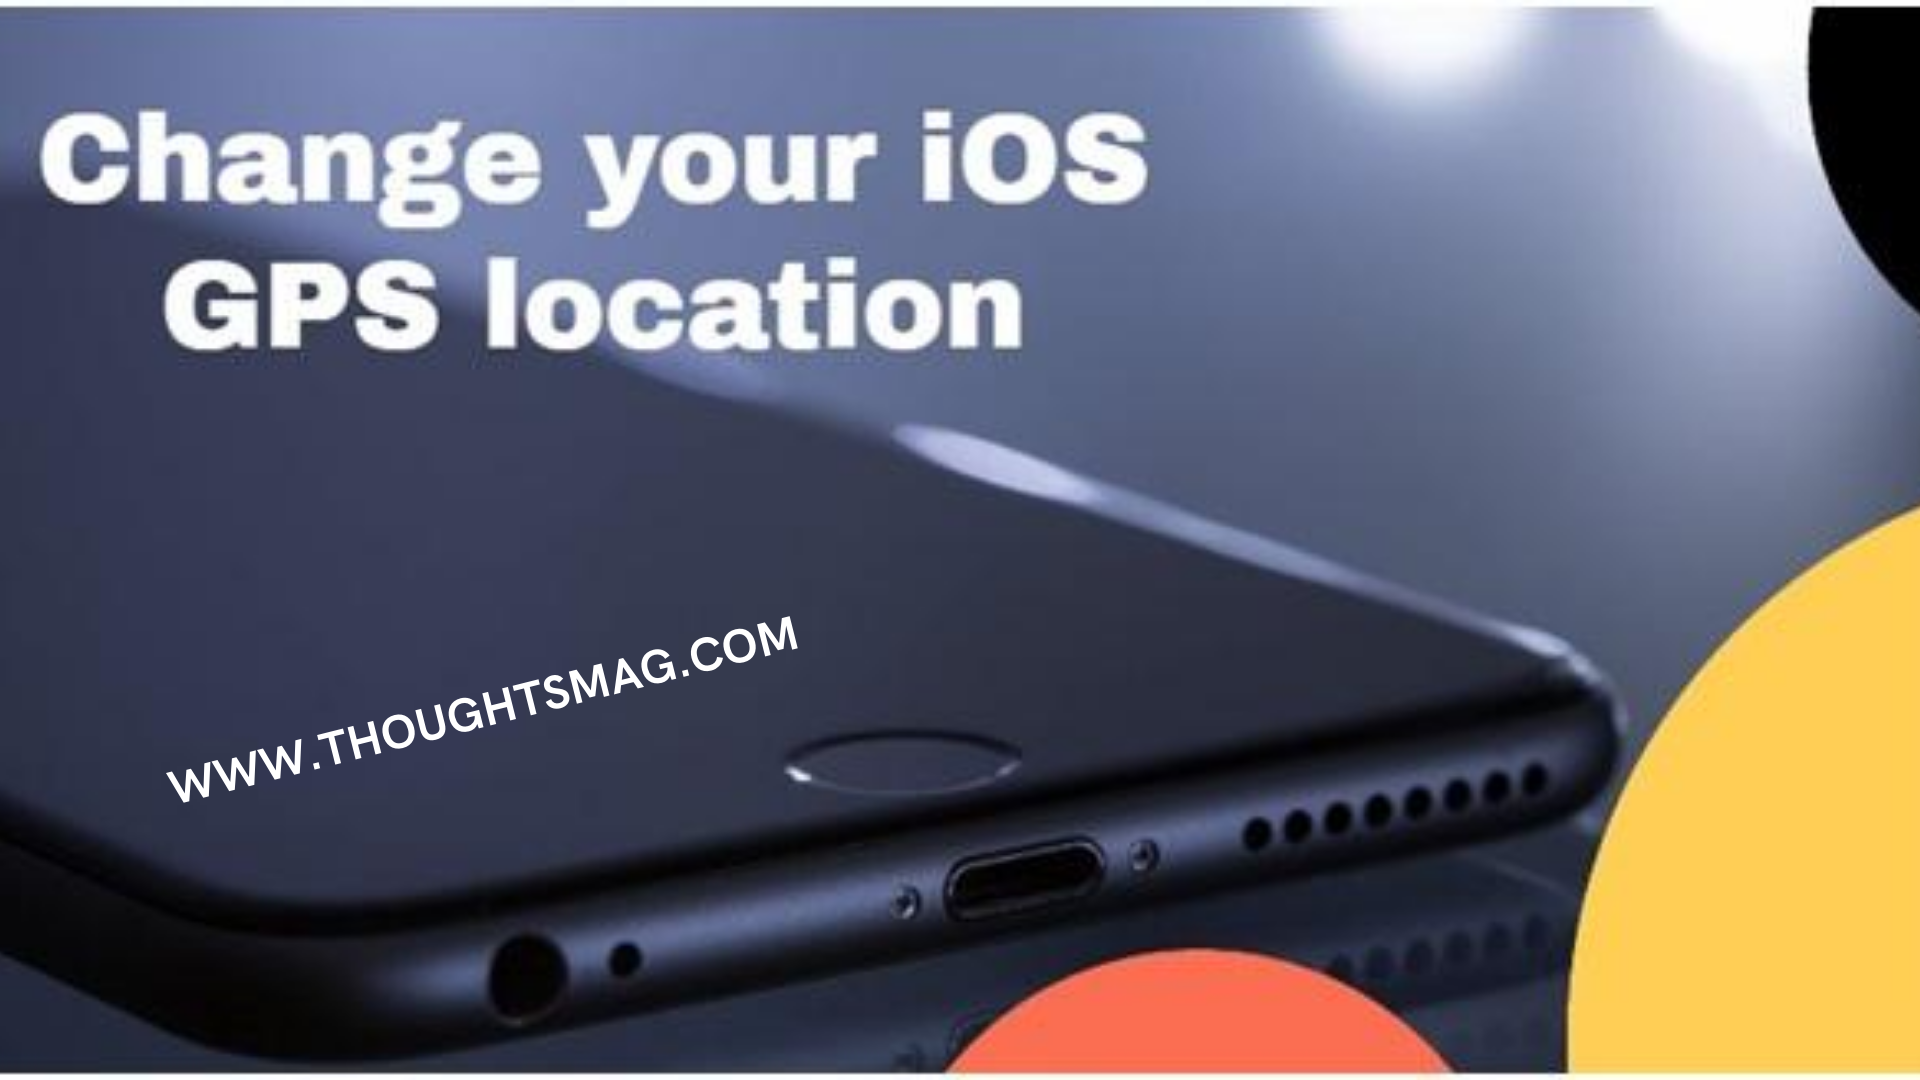 Change your iOS GPS location